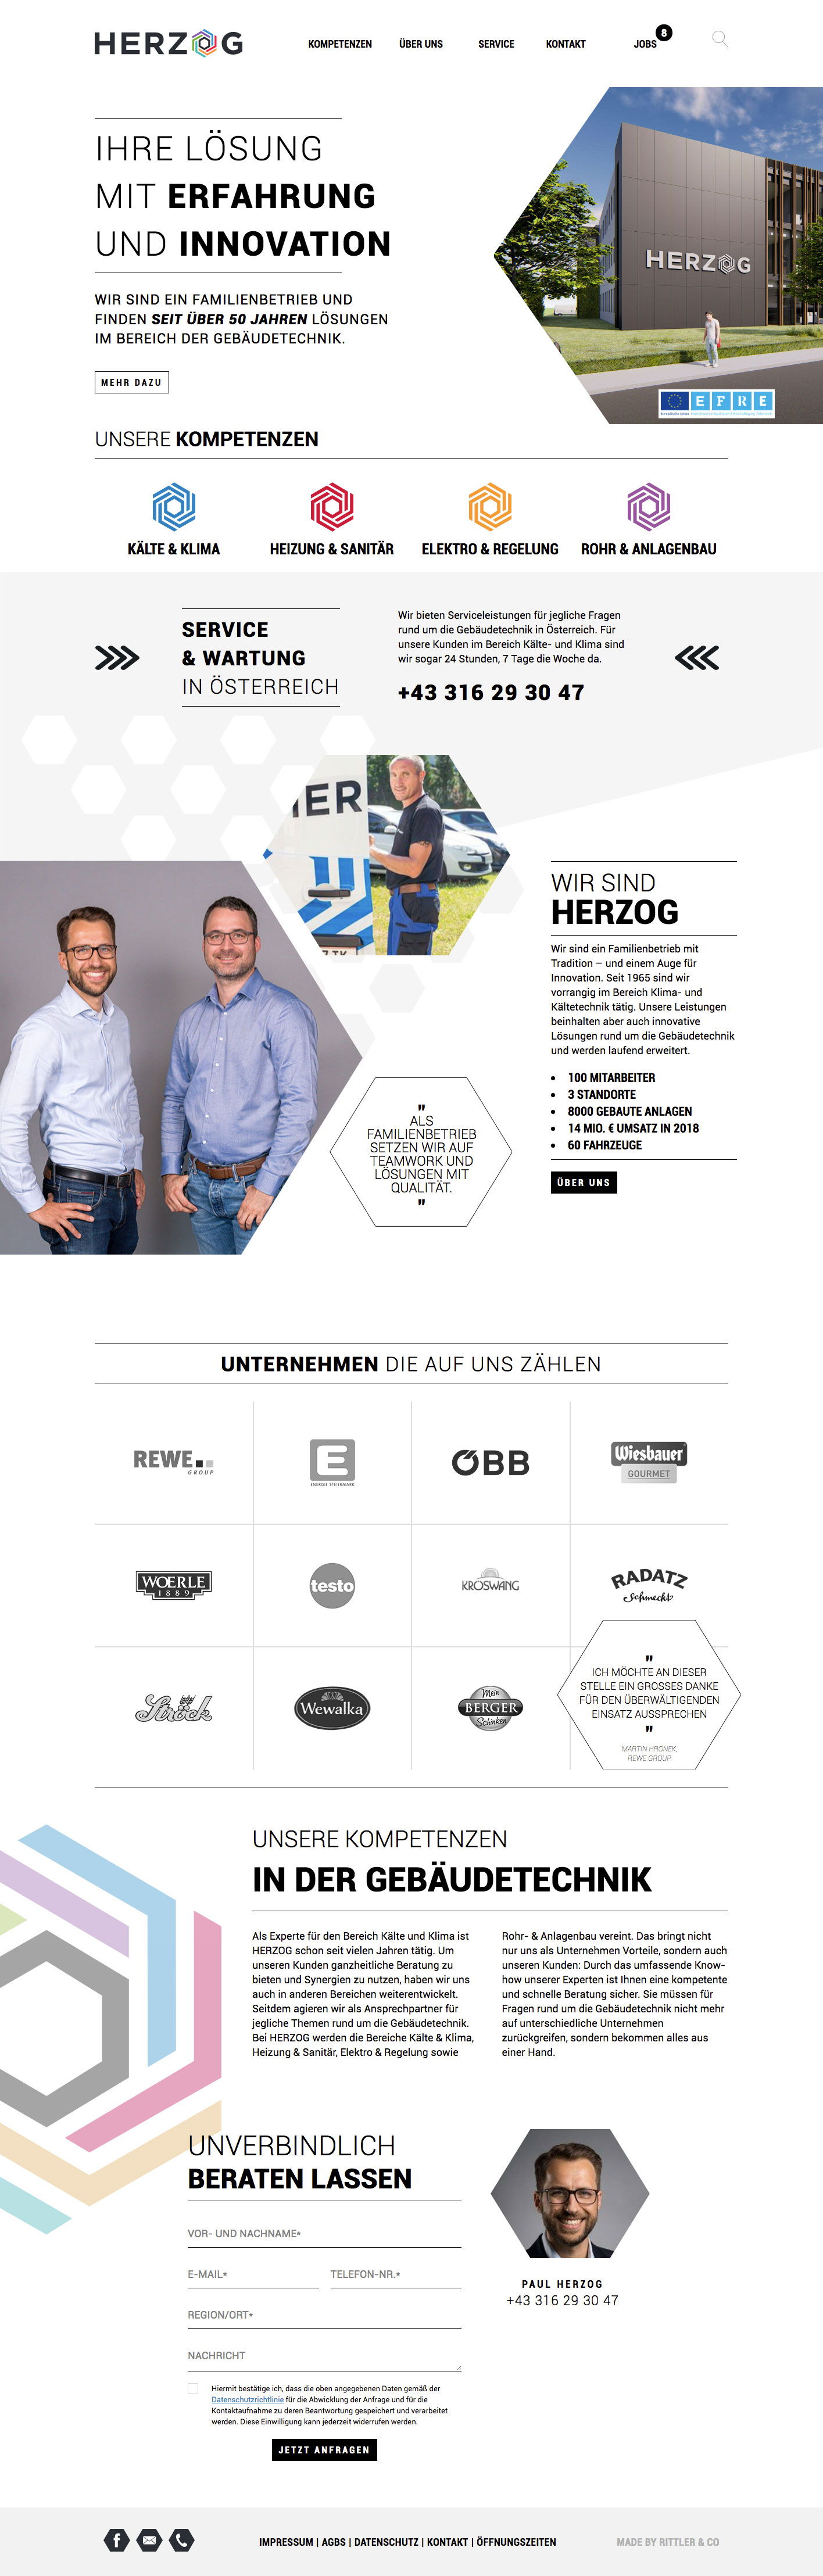 herzog_web